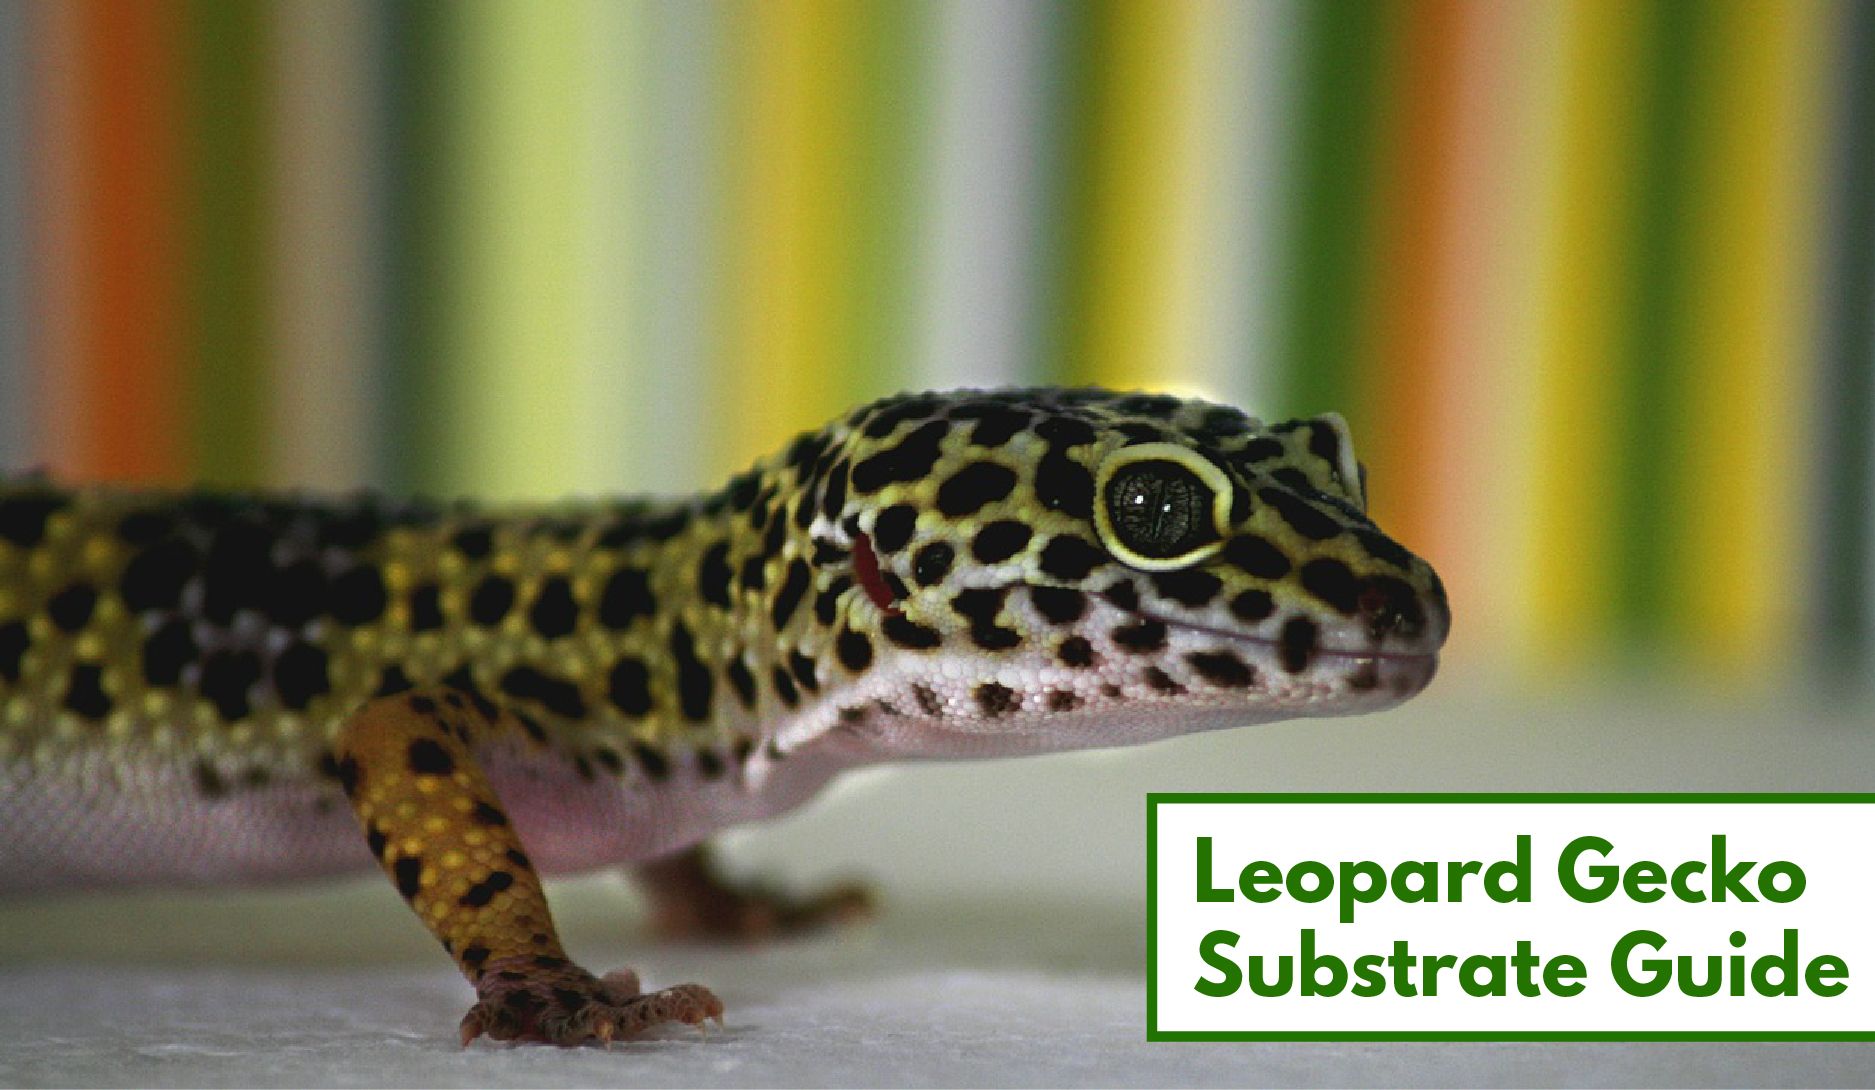 Habistat Leopard Gecko Bedding